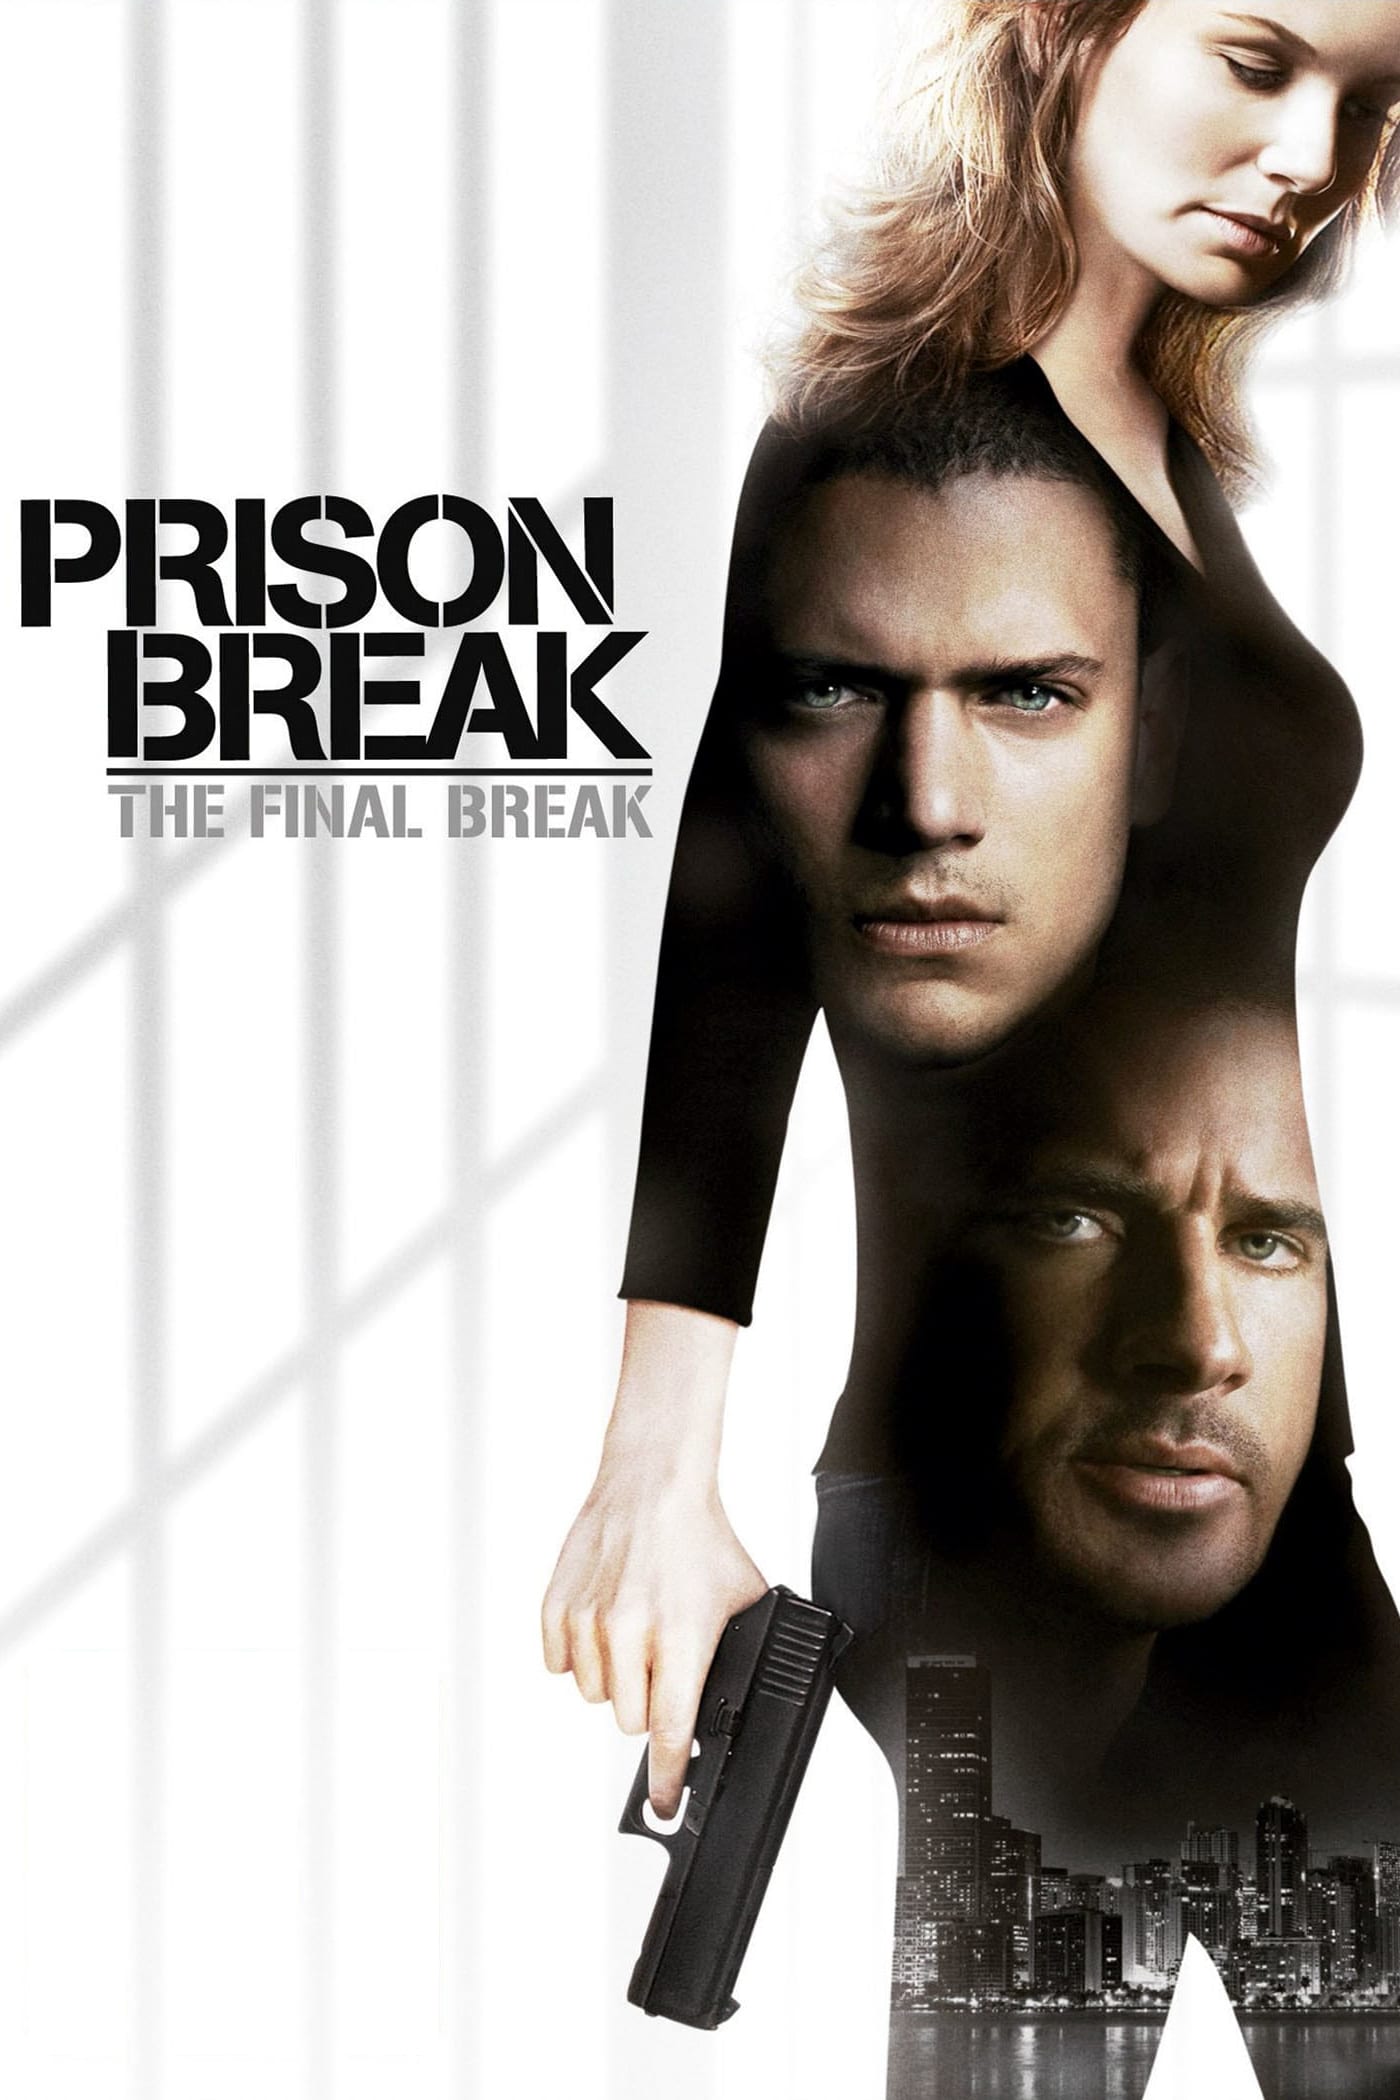 Prison Break: Evasión final